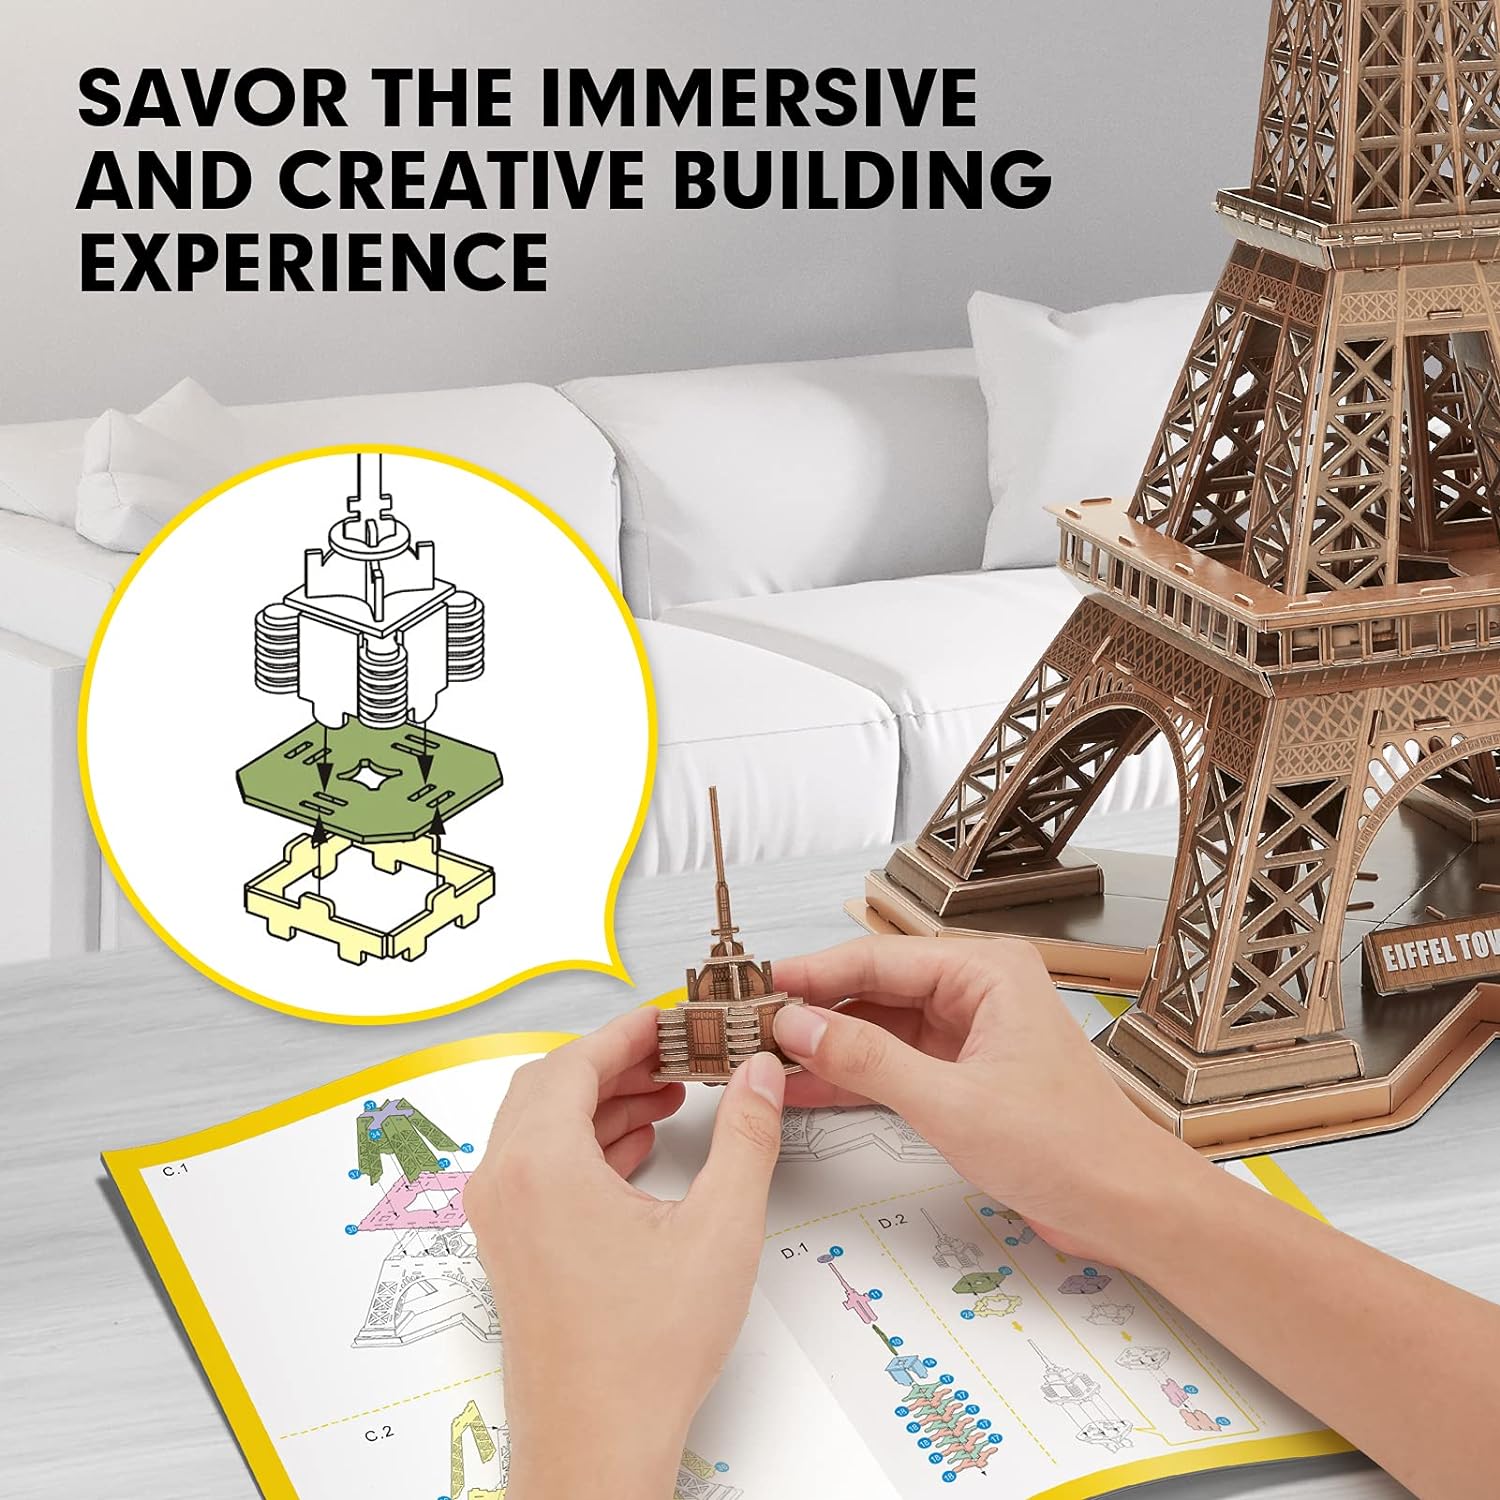 CubicFun 3D Puzzles Eiffel Tower Model Kit National Geographic, Paris with Booklet, 80 Pieces